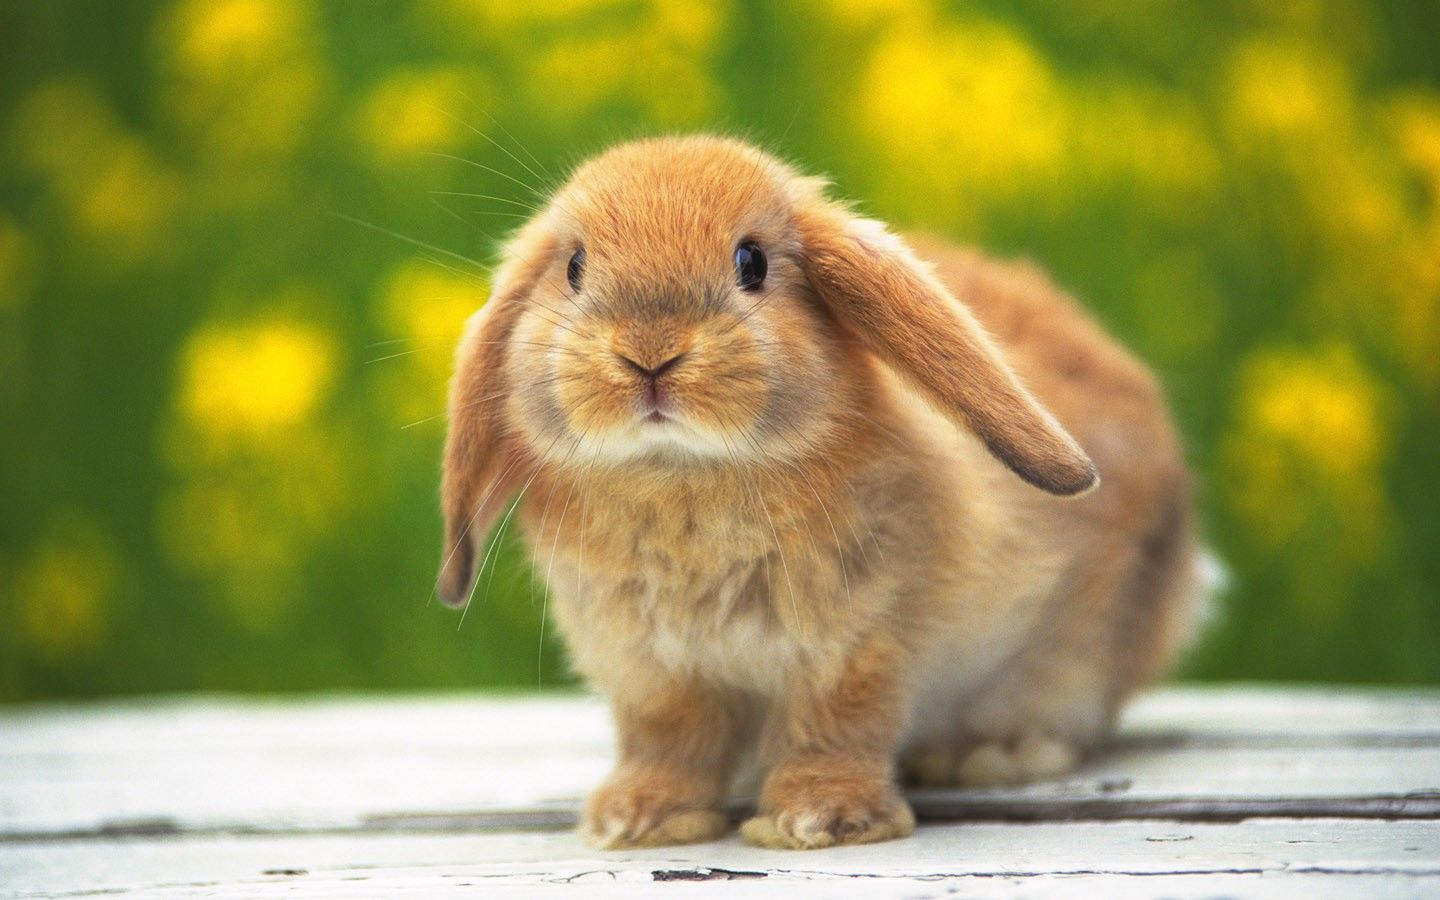 cute rabbit images hd